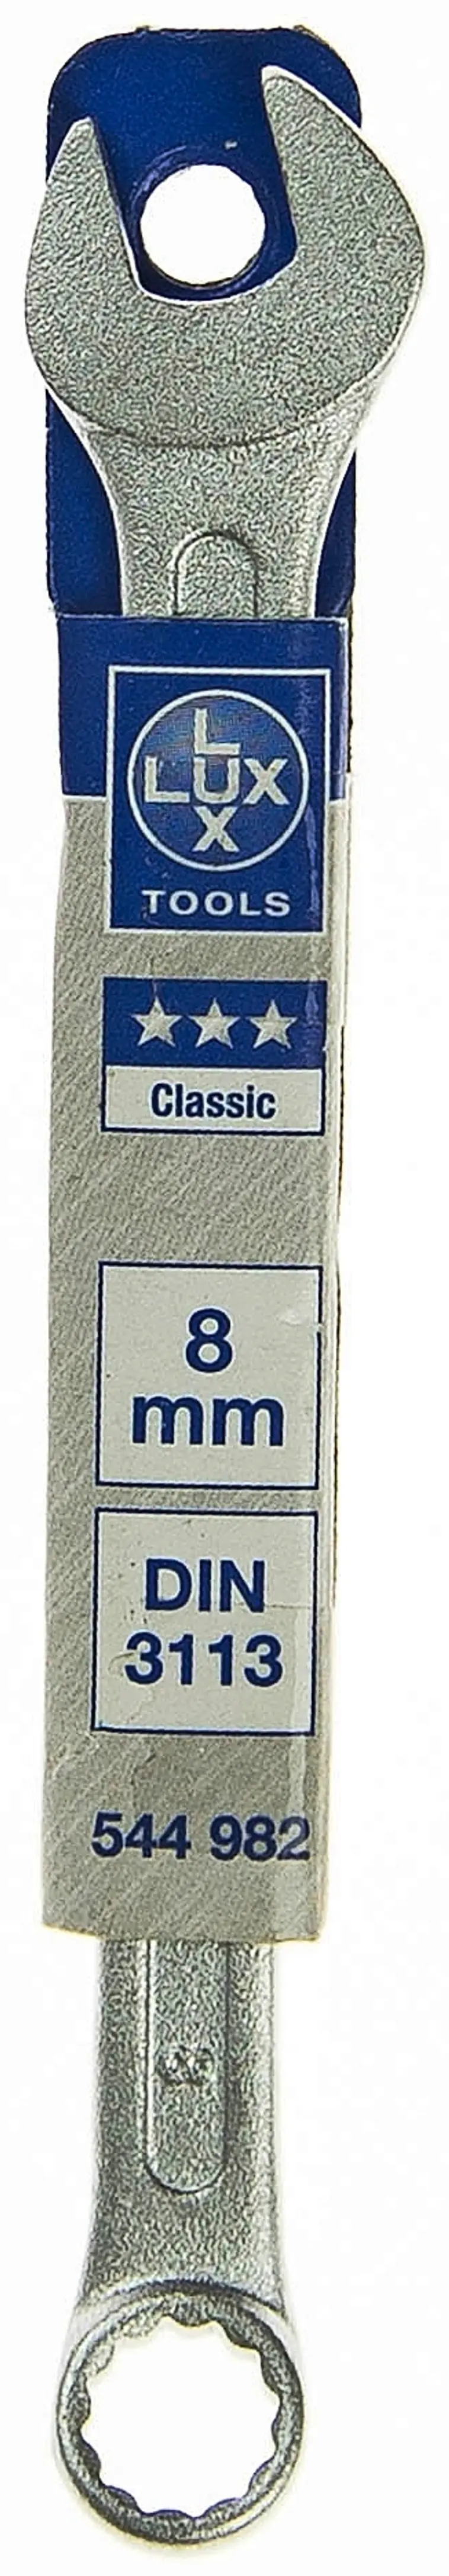 LUX-TOOLS yhdistelmäavain 8mm Classic